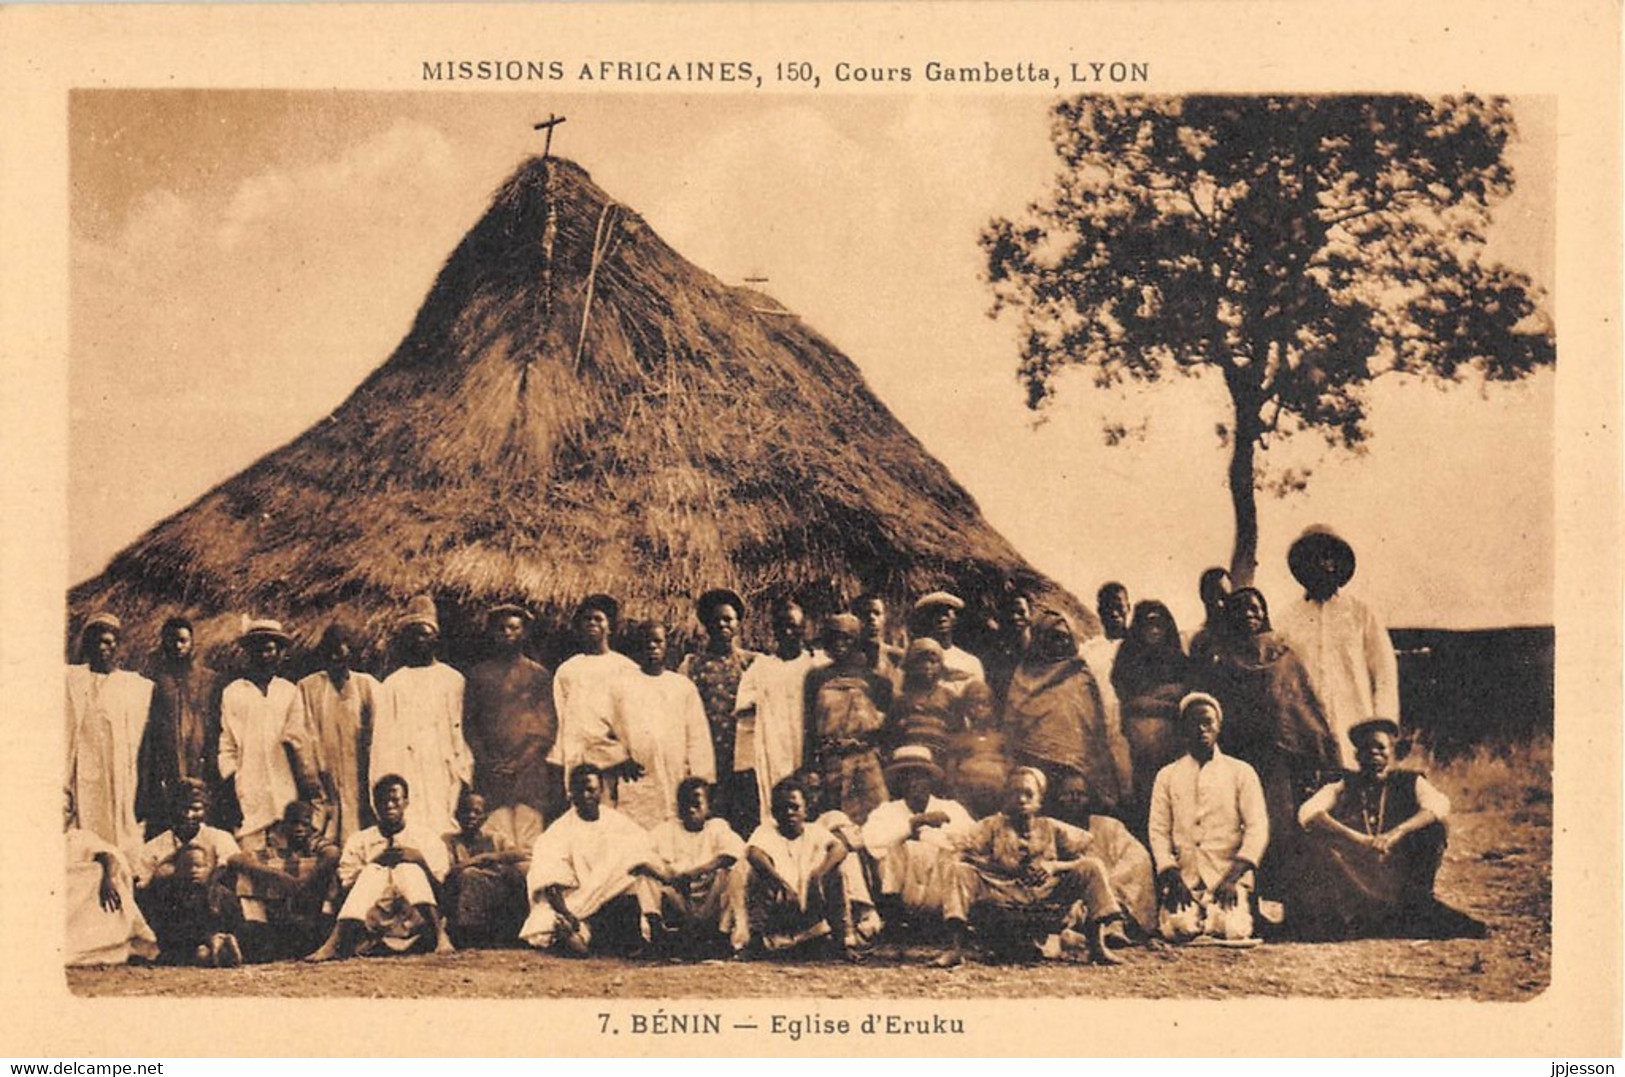 BENIN - EGLISE D'ERUKU - MISSIONS AFRICAINES, LYON - Benin